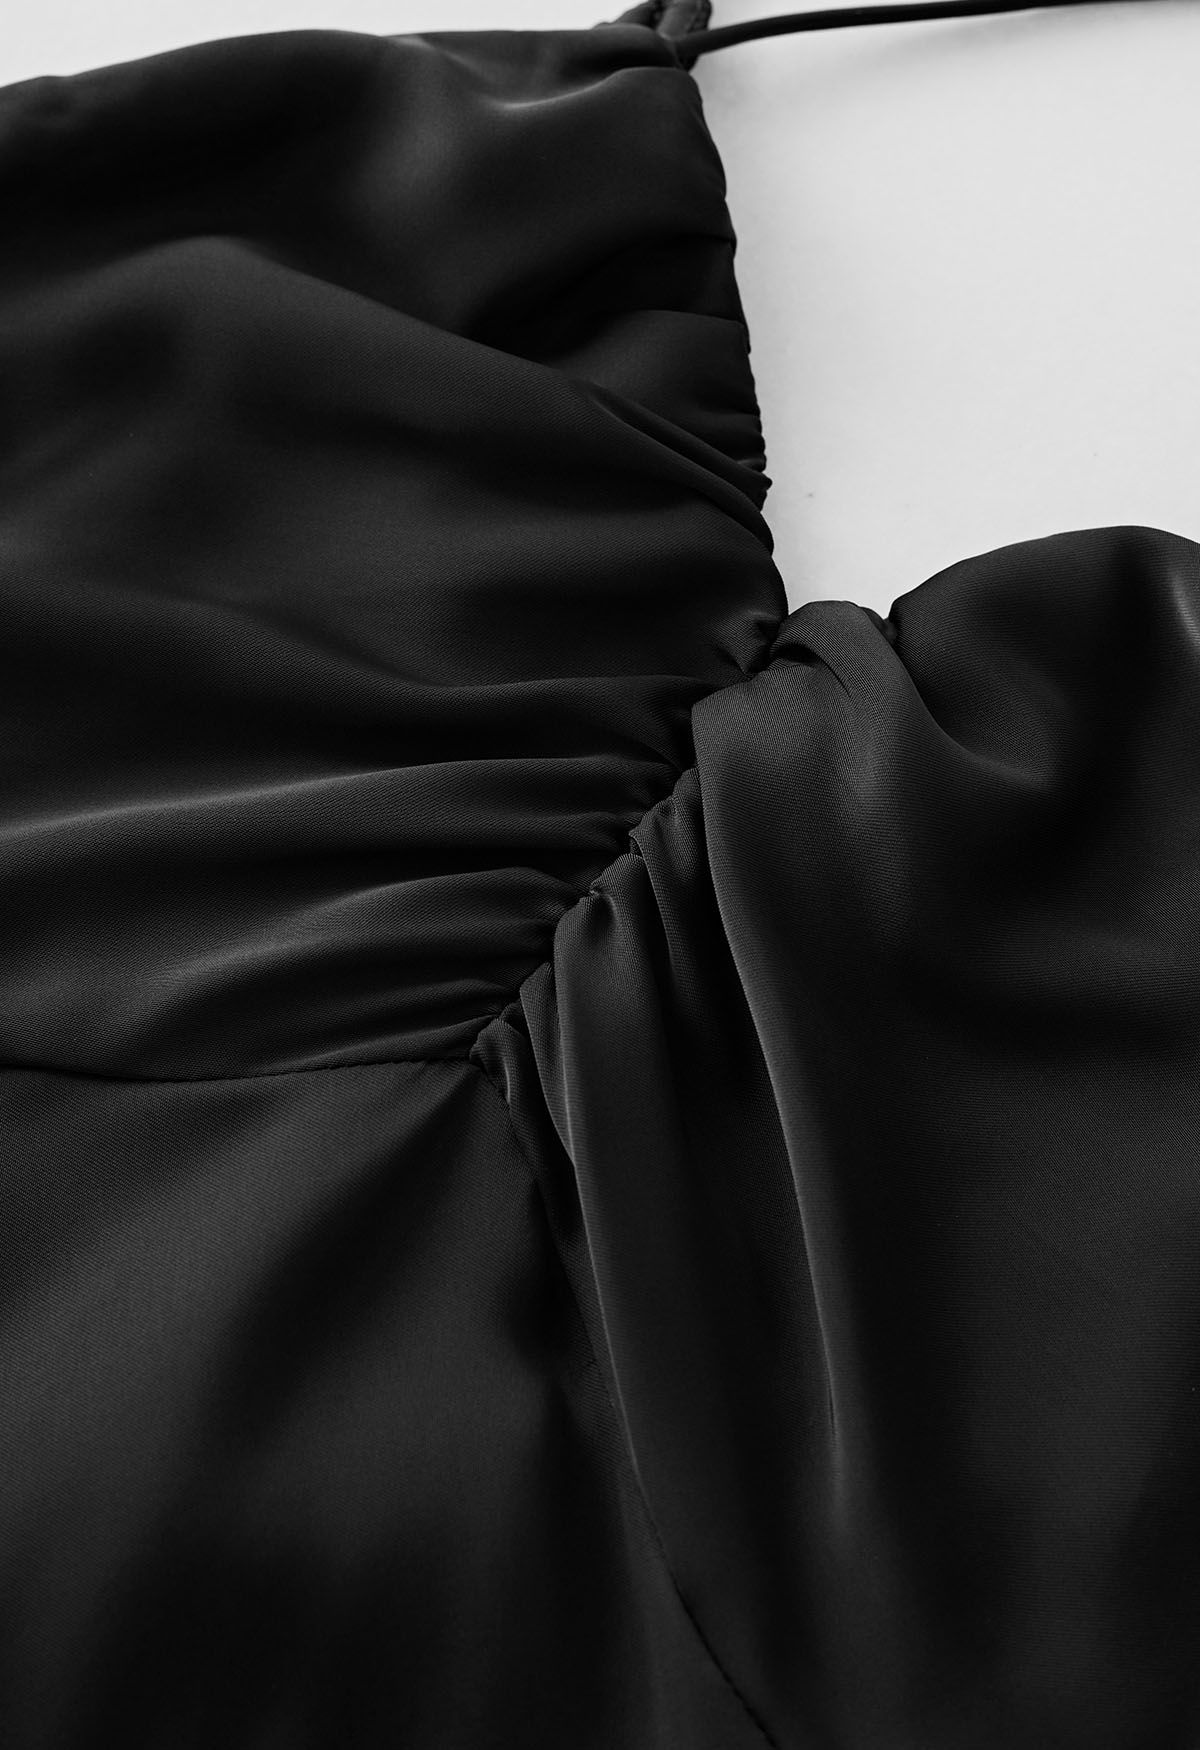 Crisscross Lace-Up Back Satin Dress in Black